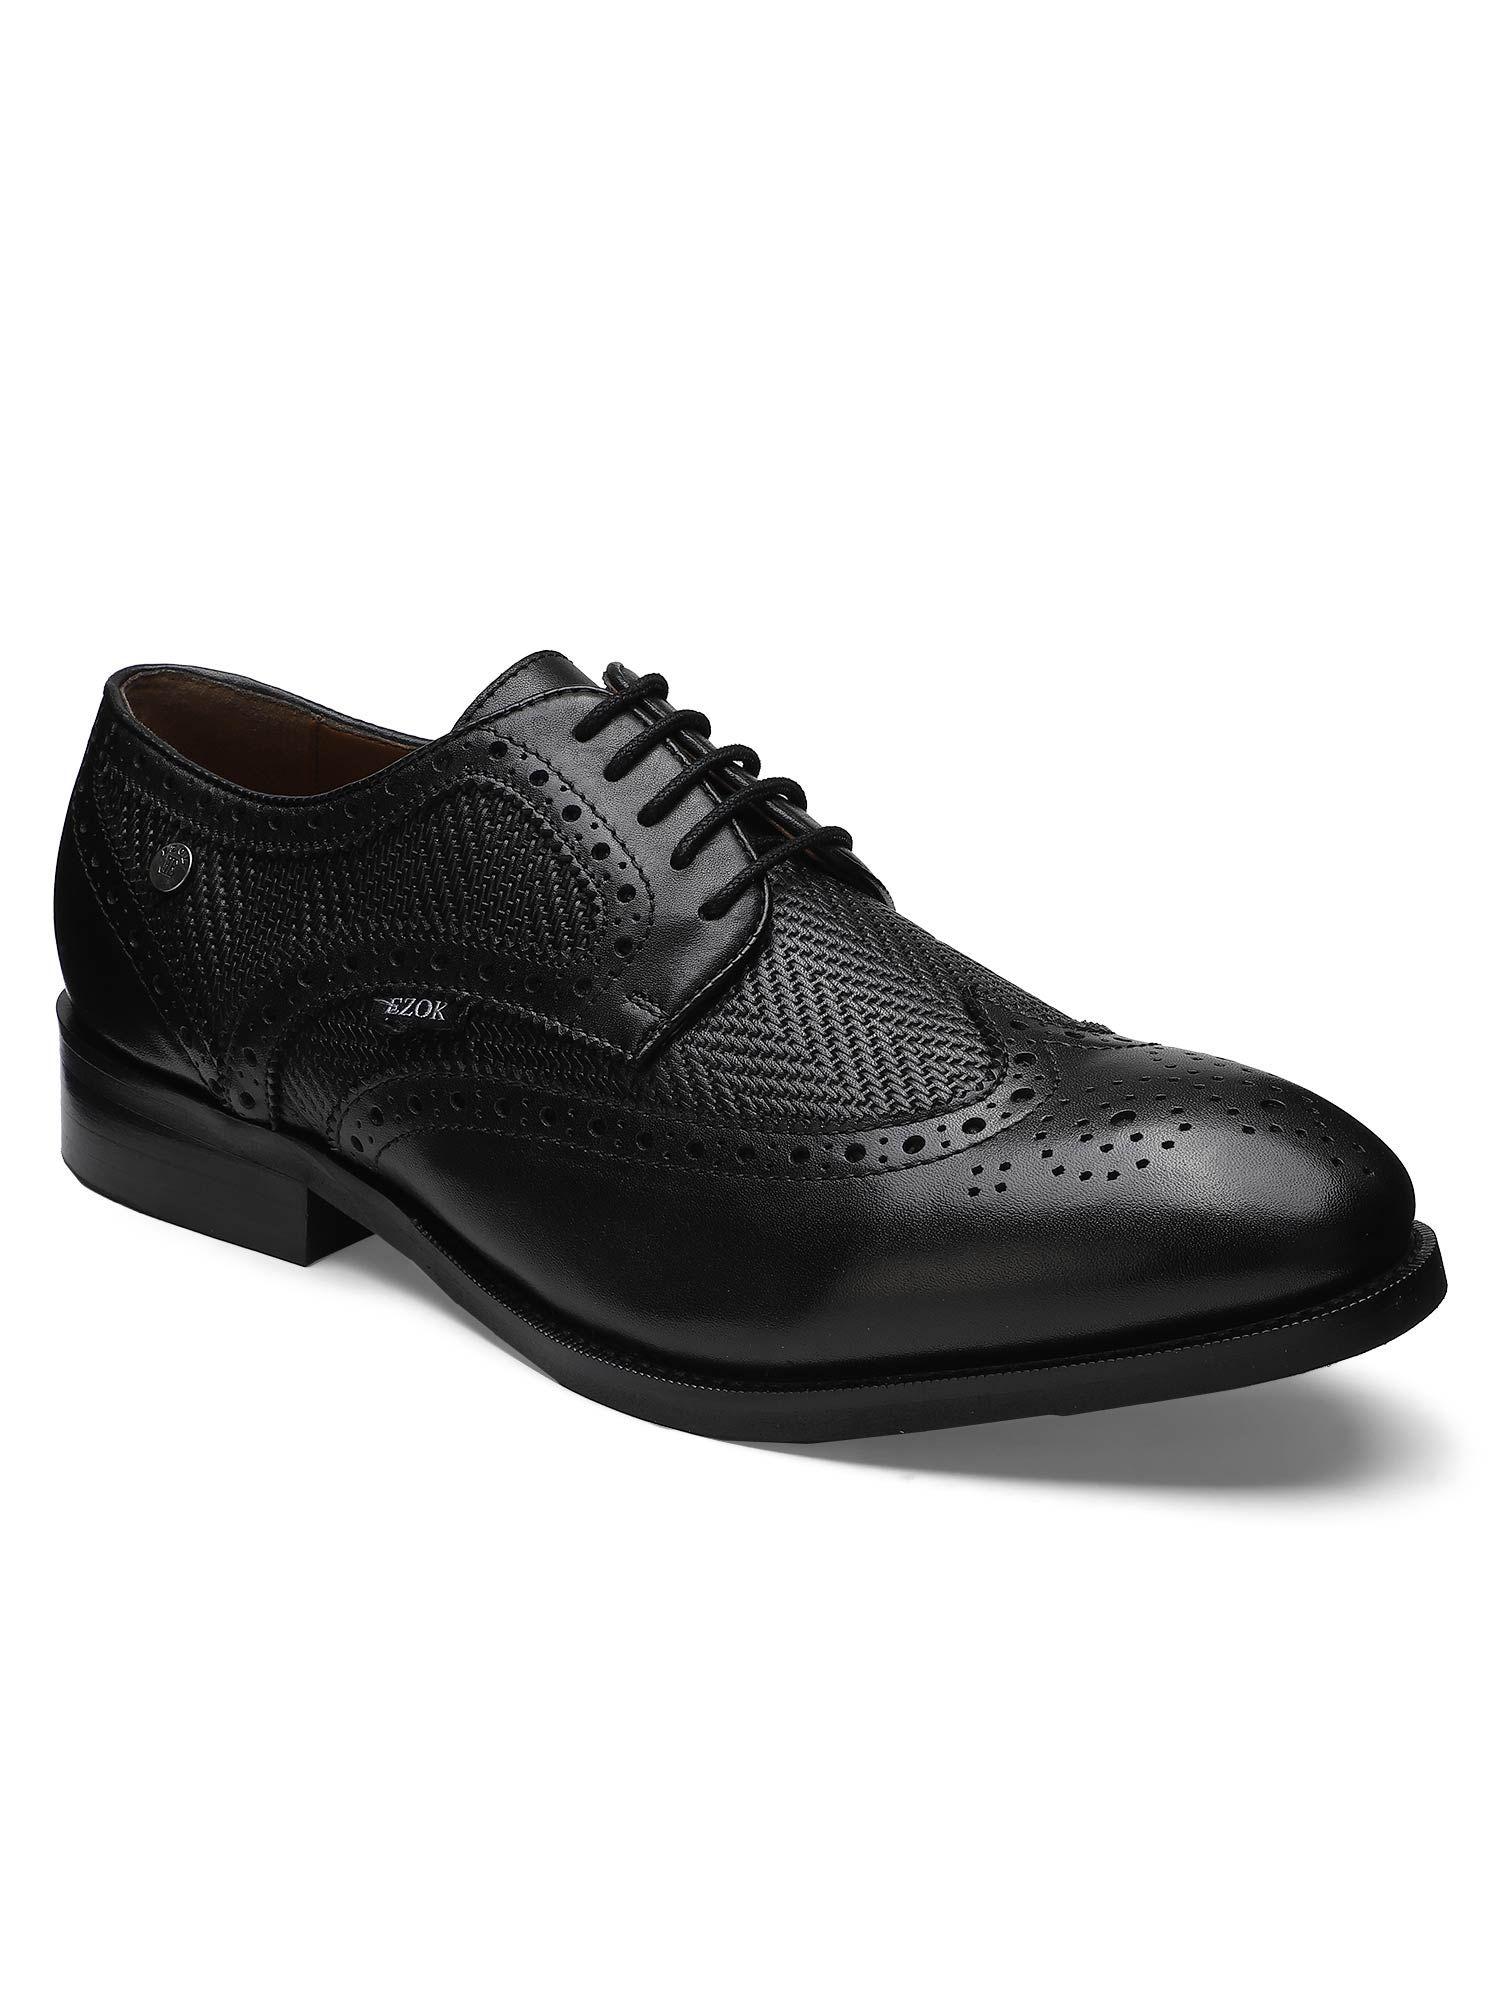 genuine leather black solid formal brogue shoes for men